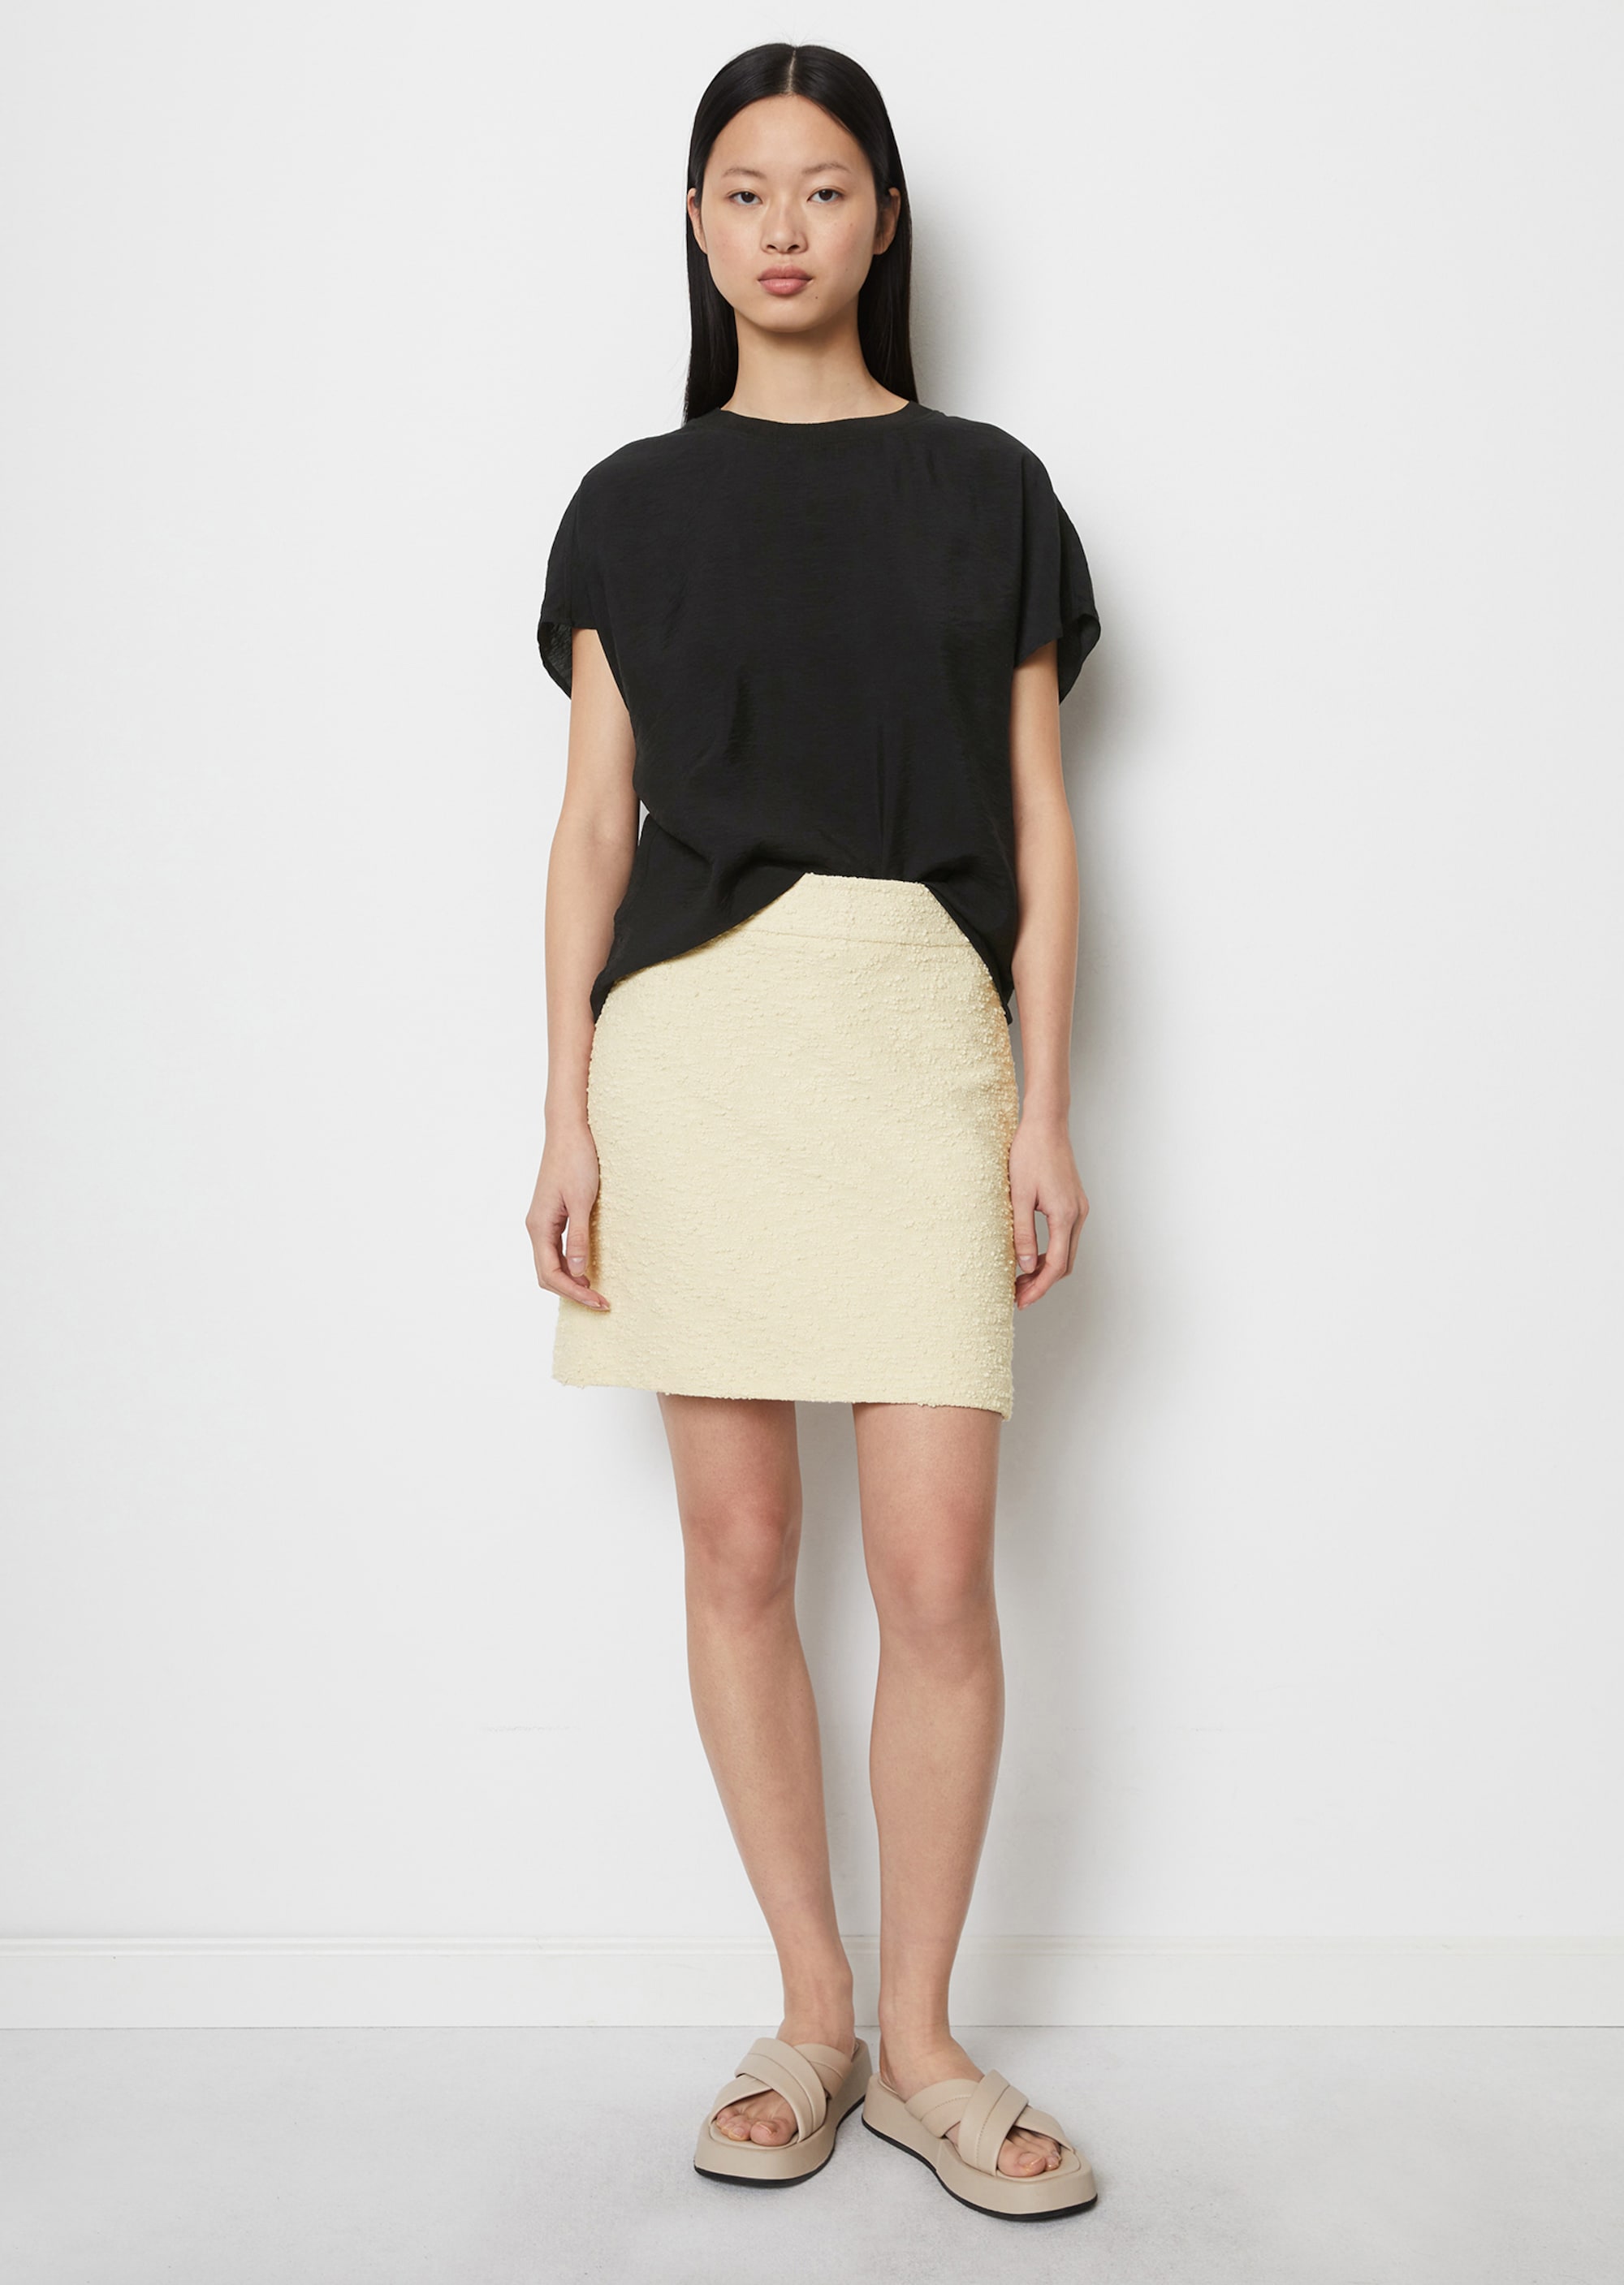 Bouclé mini skirt fitted